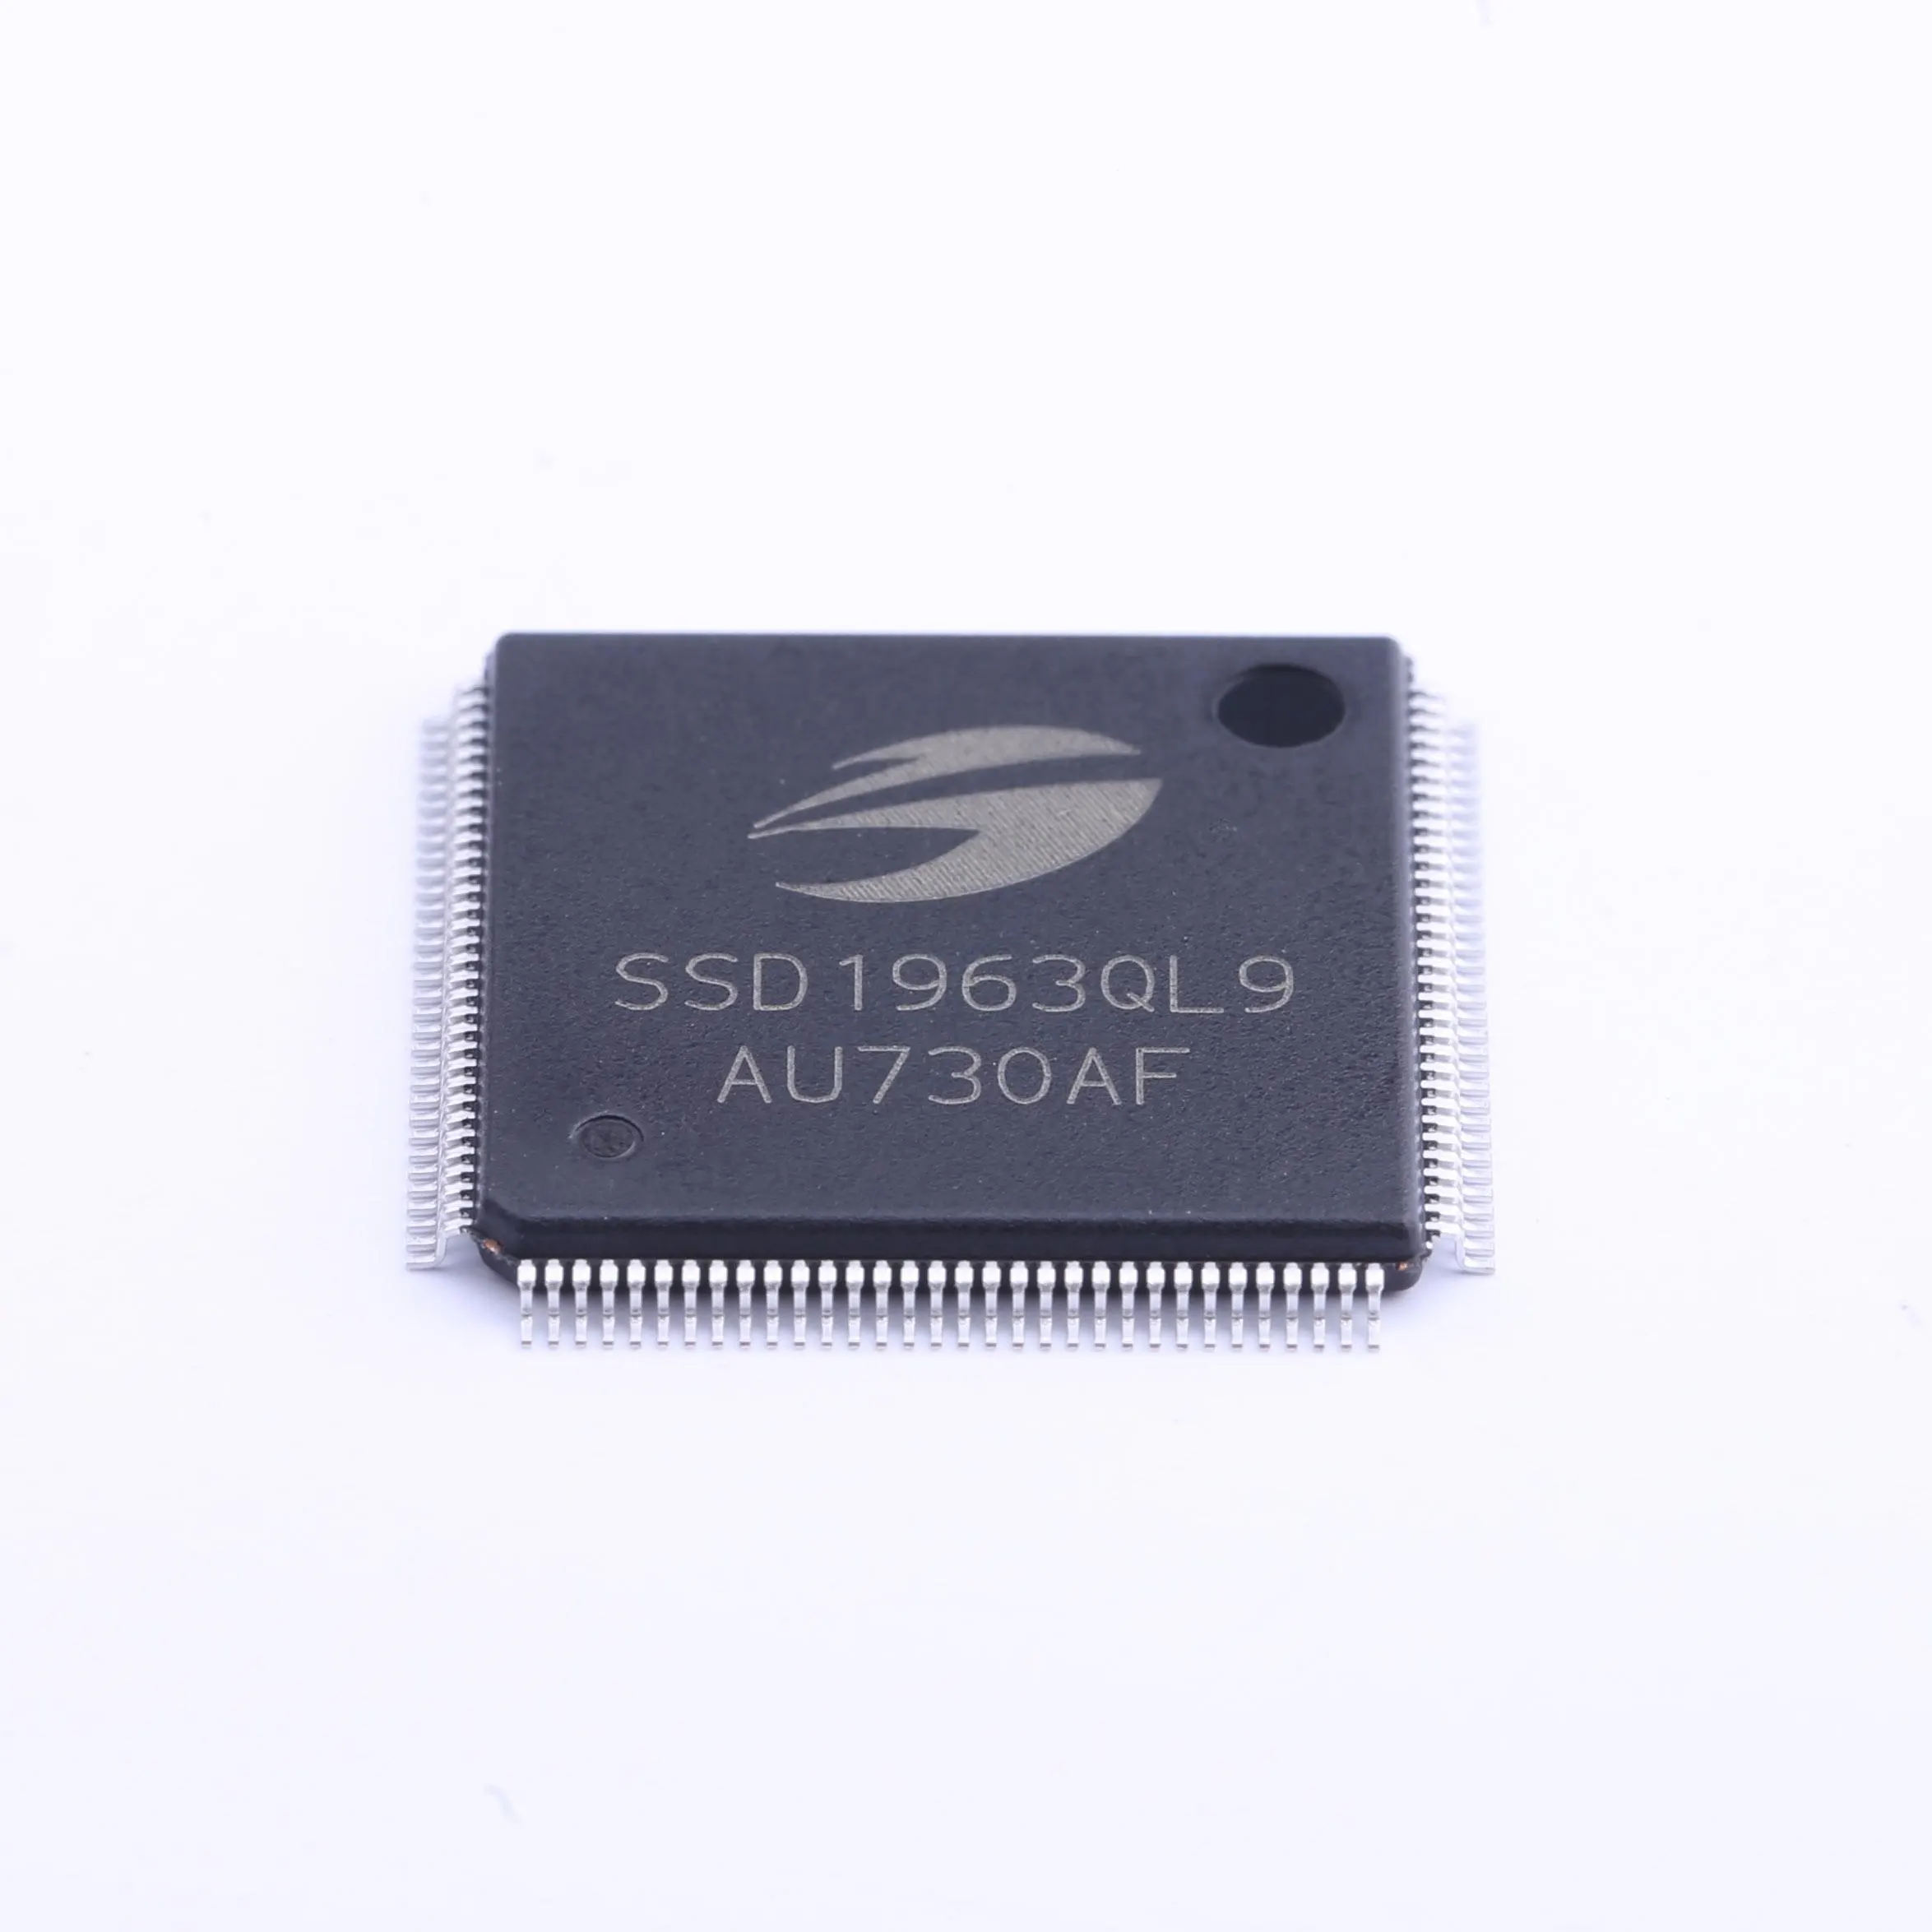 Componentes electrónicos ATD, controlador LCD IC, circuitos integrados, SSD1963, SSD1963QL9